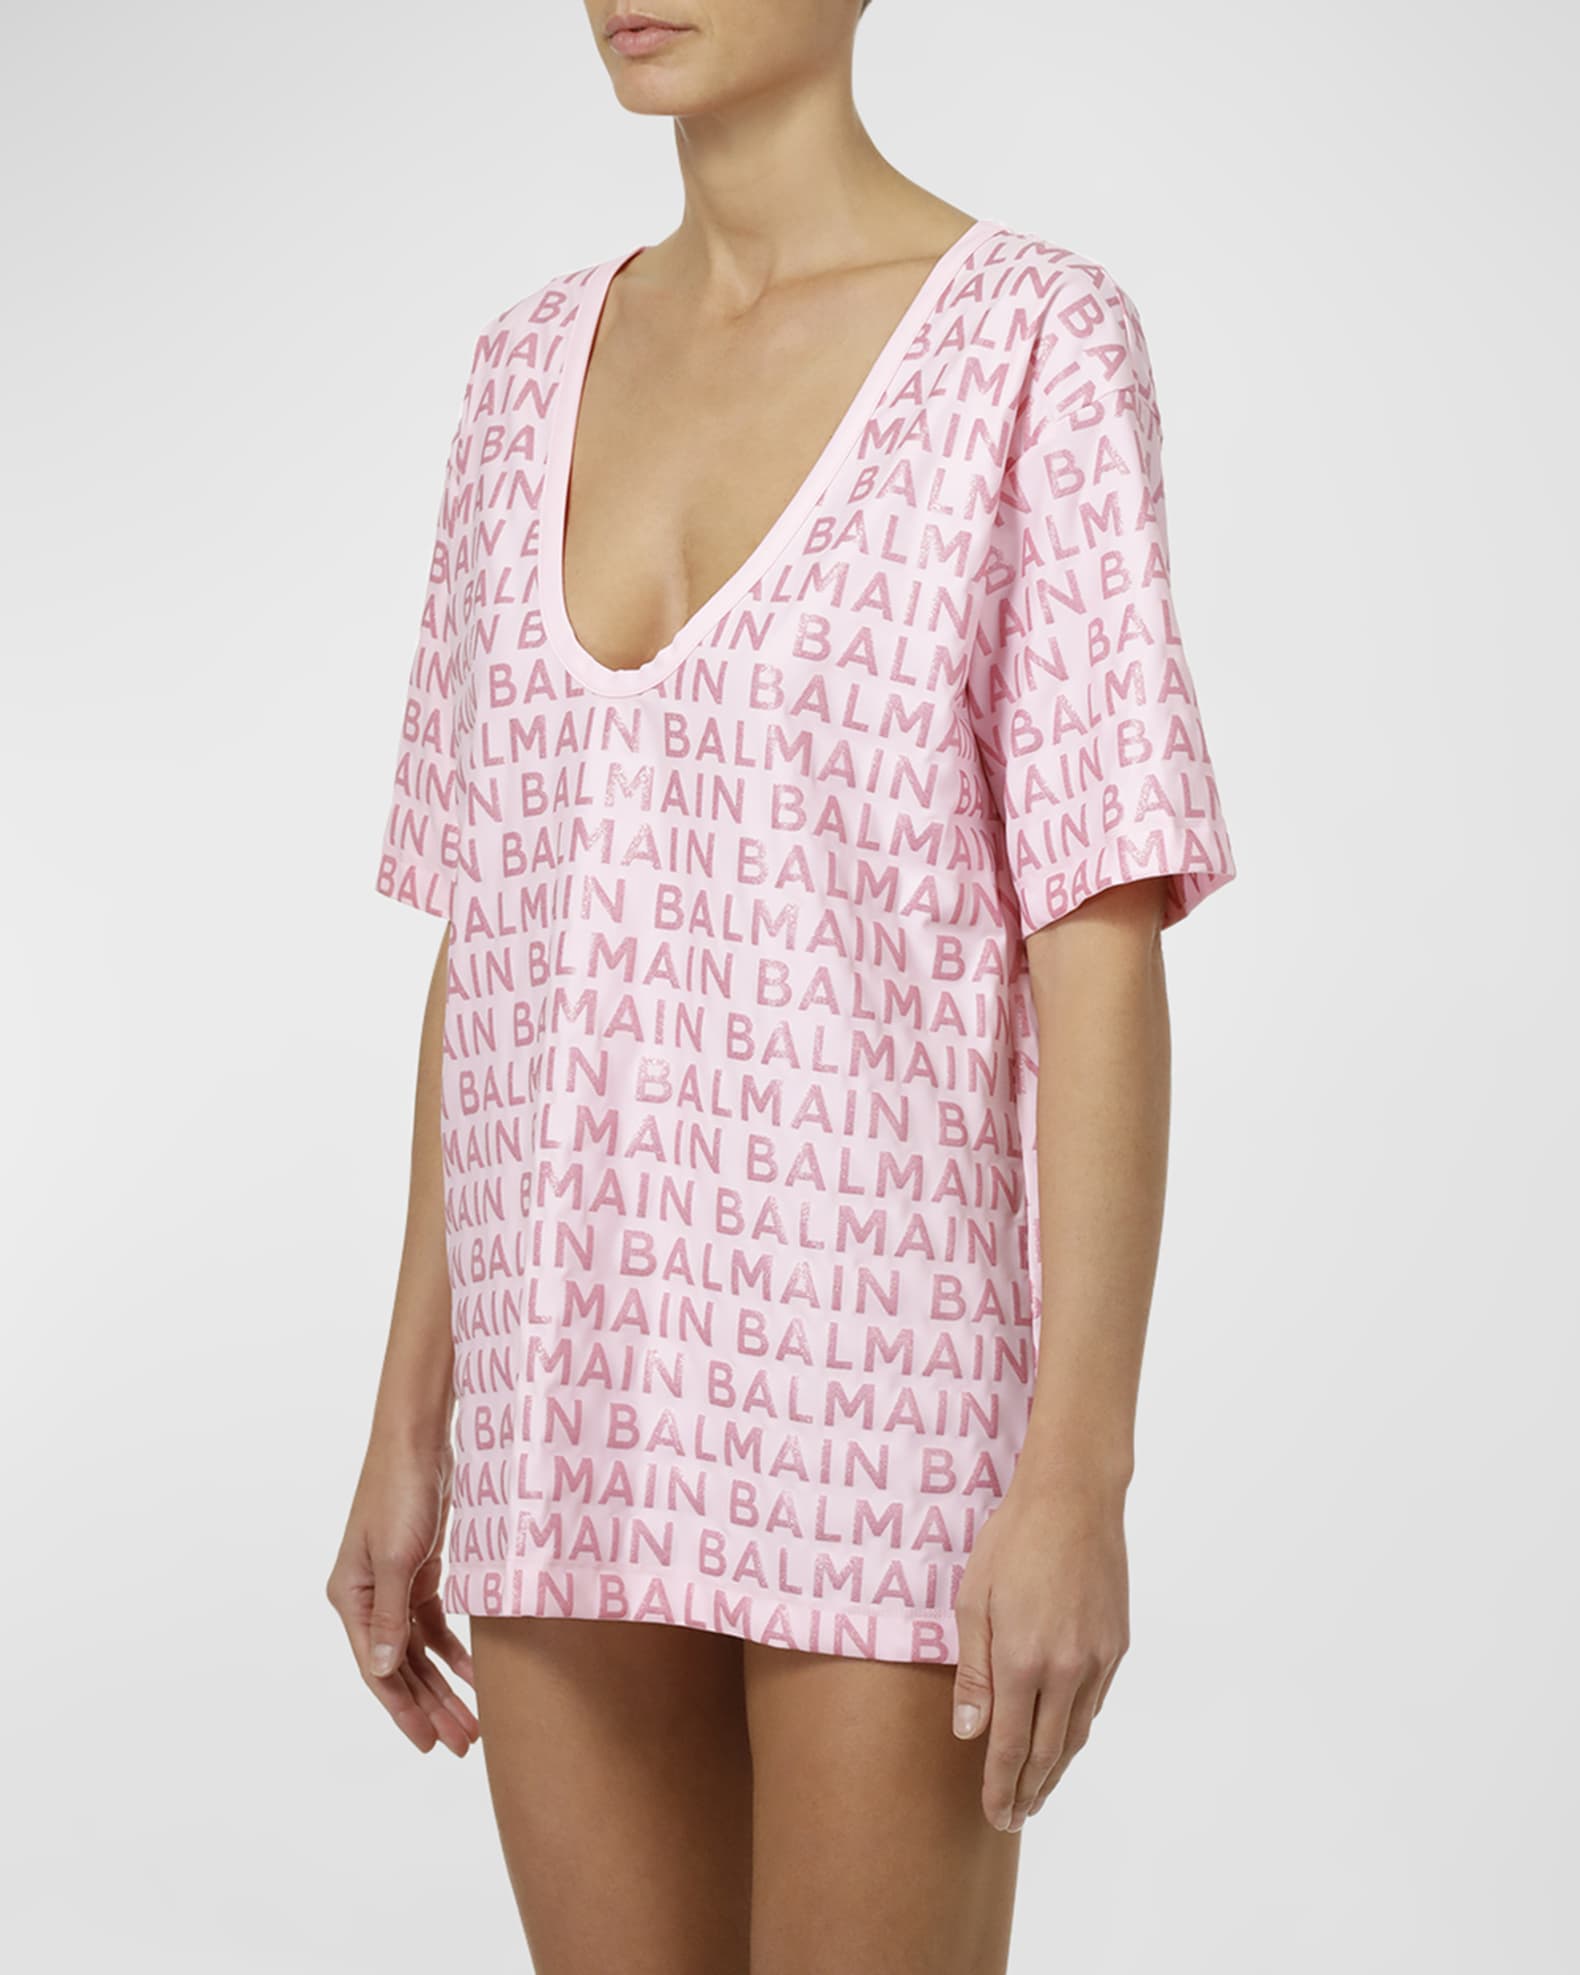 Louis Vuitton NBA Short Sleeve T-Shirt Size M Retail $1250 Our